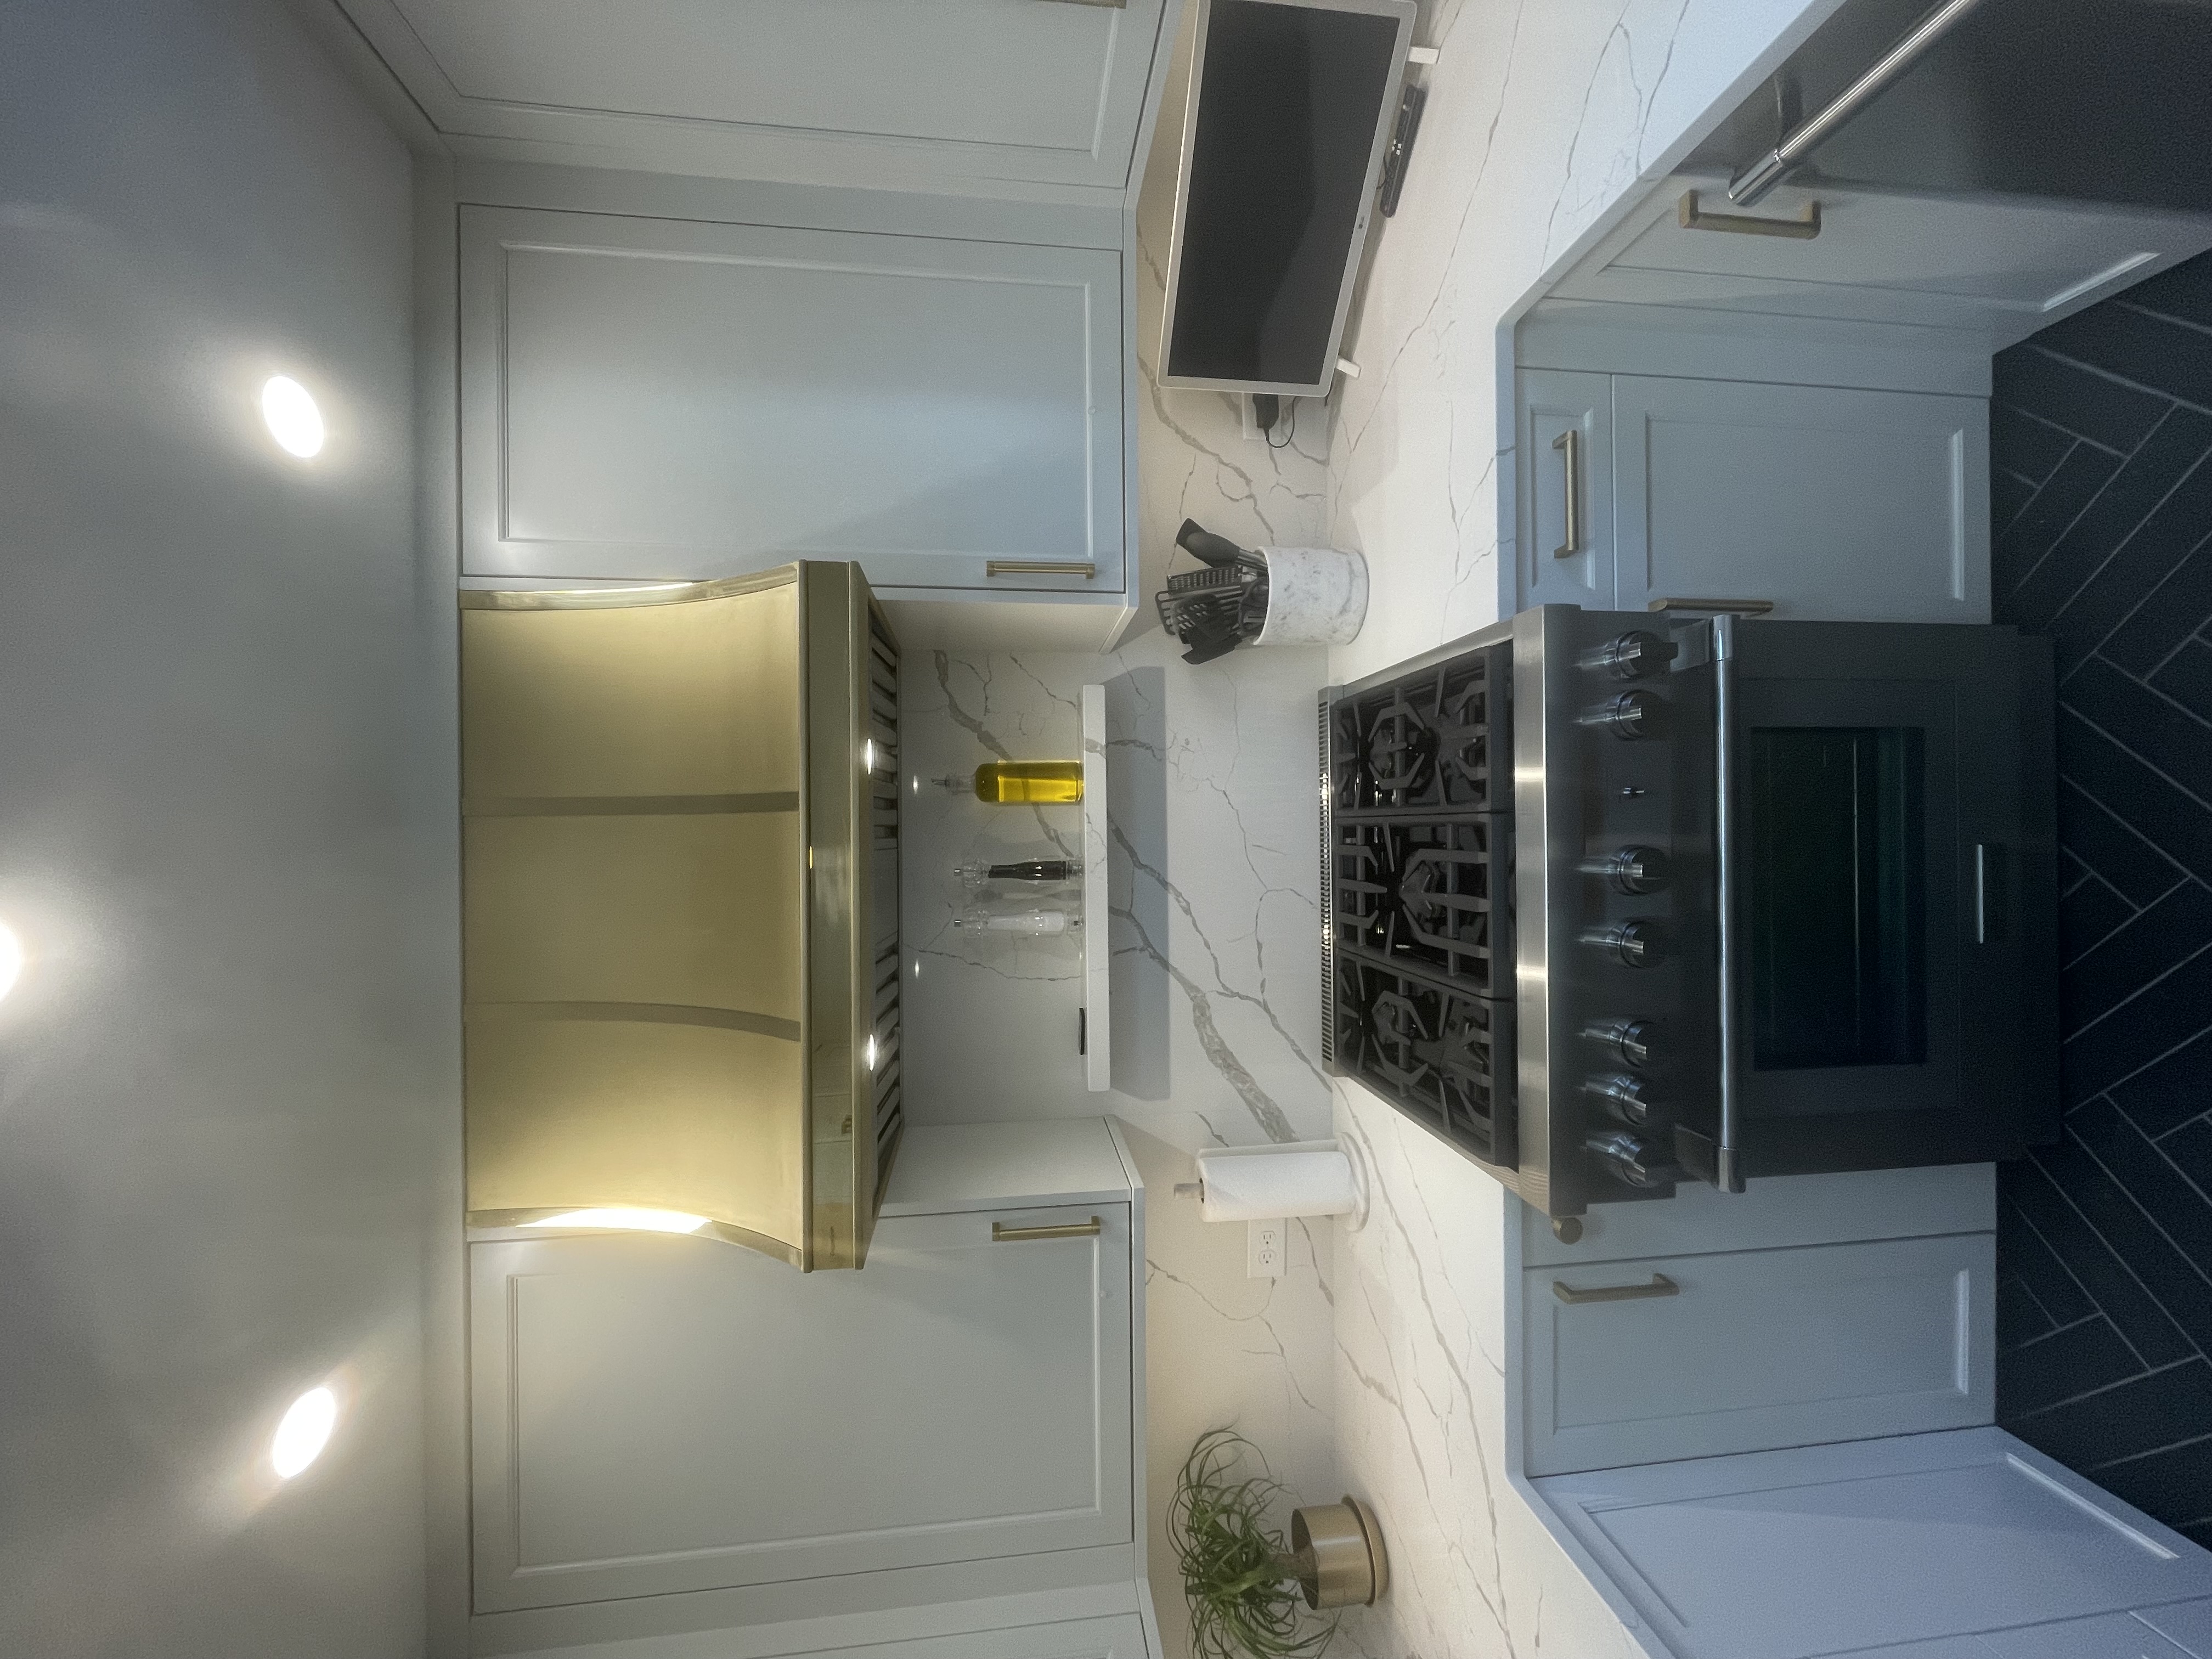 French kitchen design,kitchen design idea, including range hood, white kitchen cabinets,marble backsplash beautiful white kitchen countertops